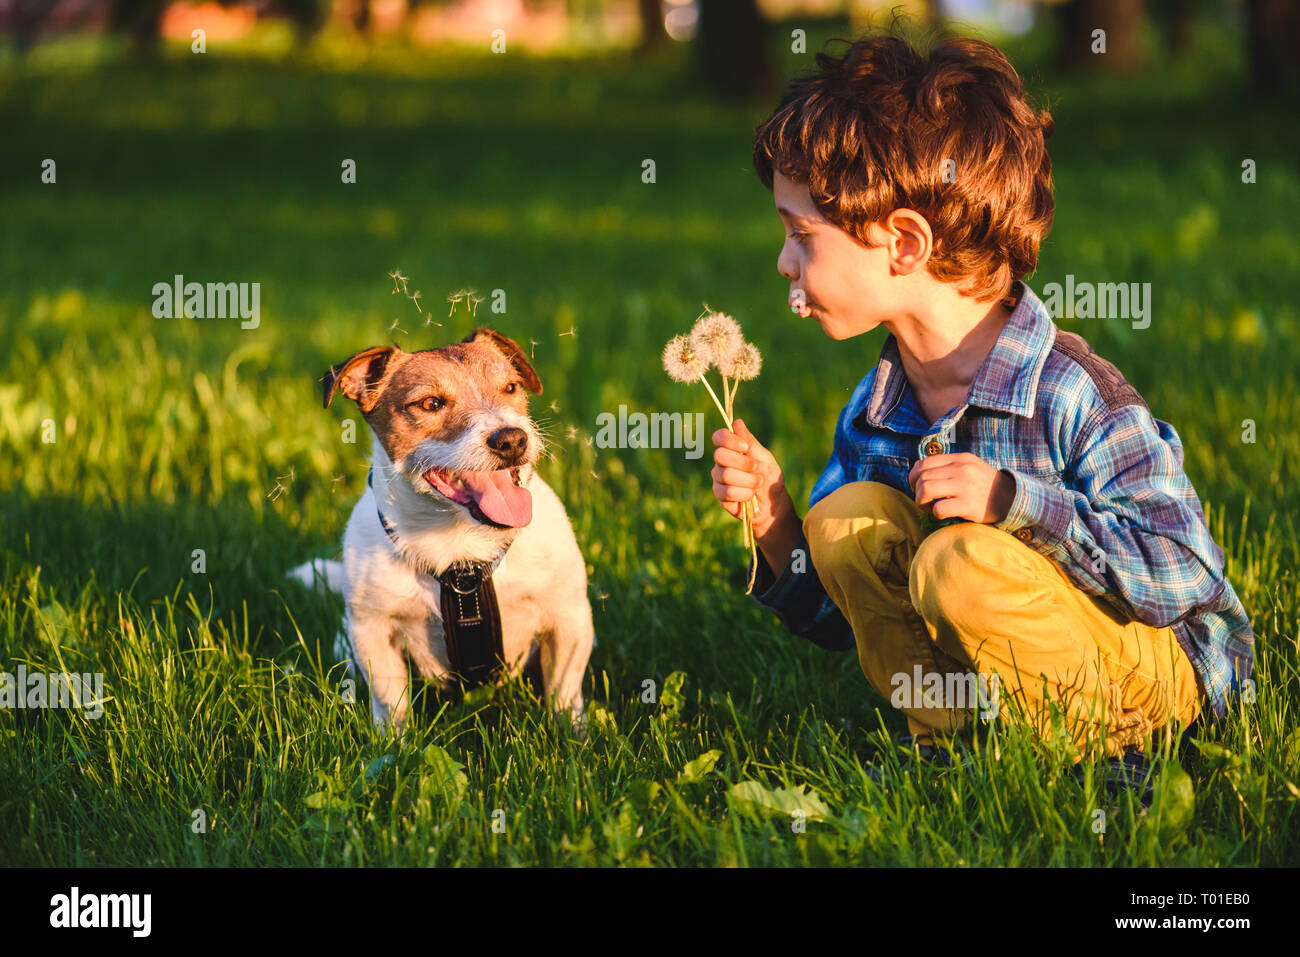 Naughty kid boy making bad joke blowing dandelions at dog Stock Photo